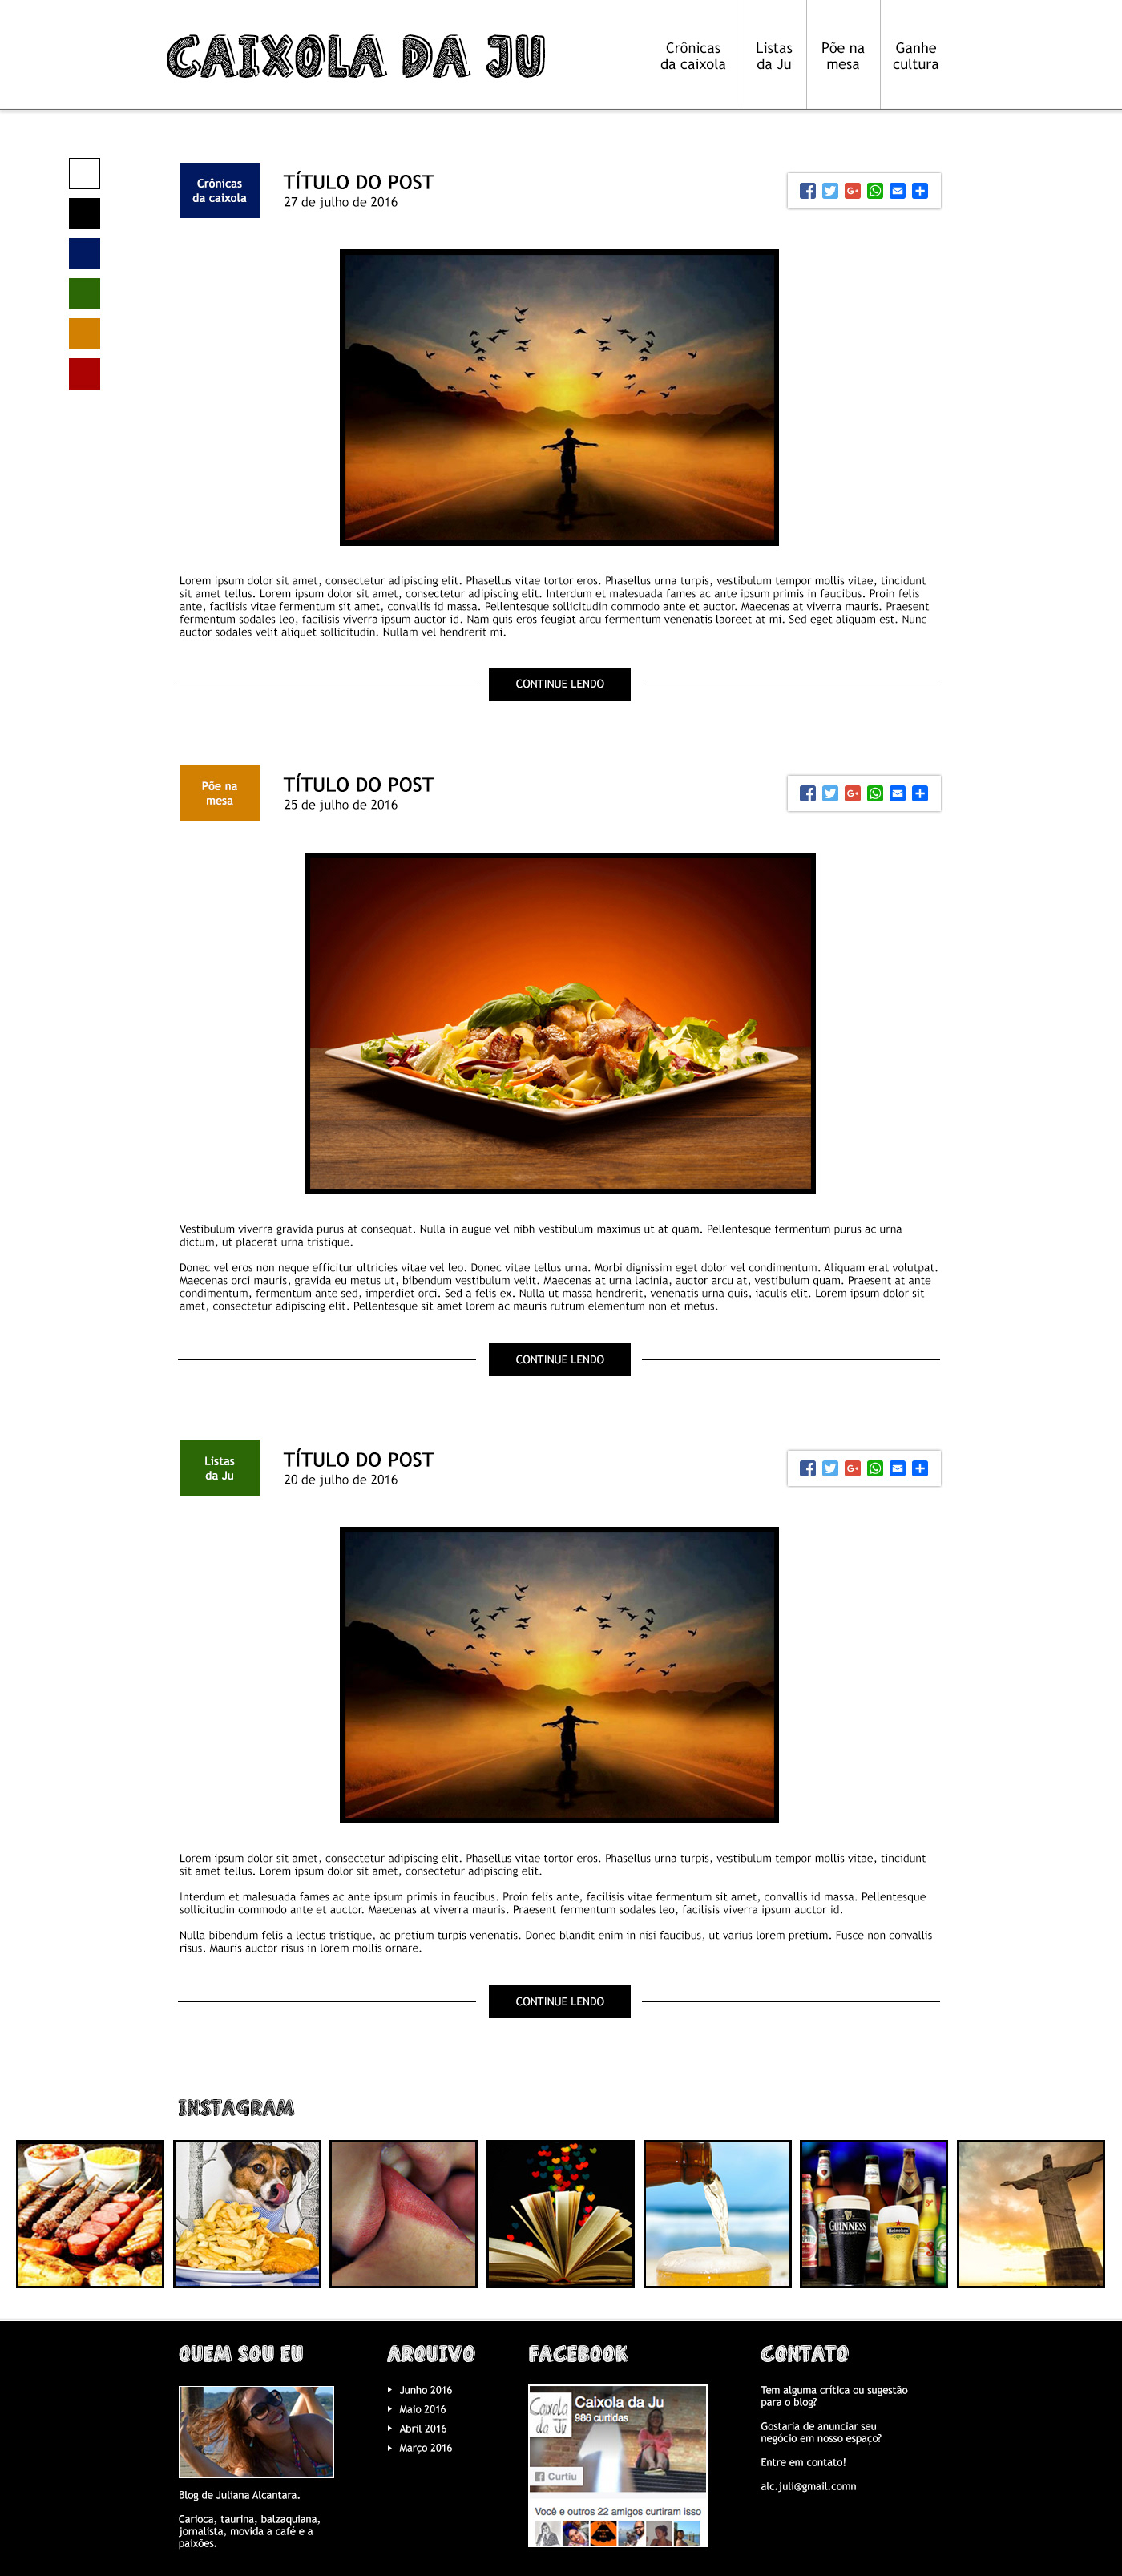 Image may contain: screenshot, abstract and fast food